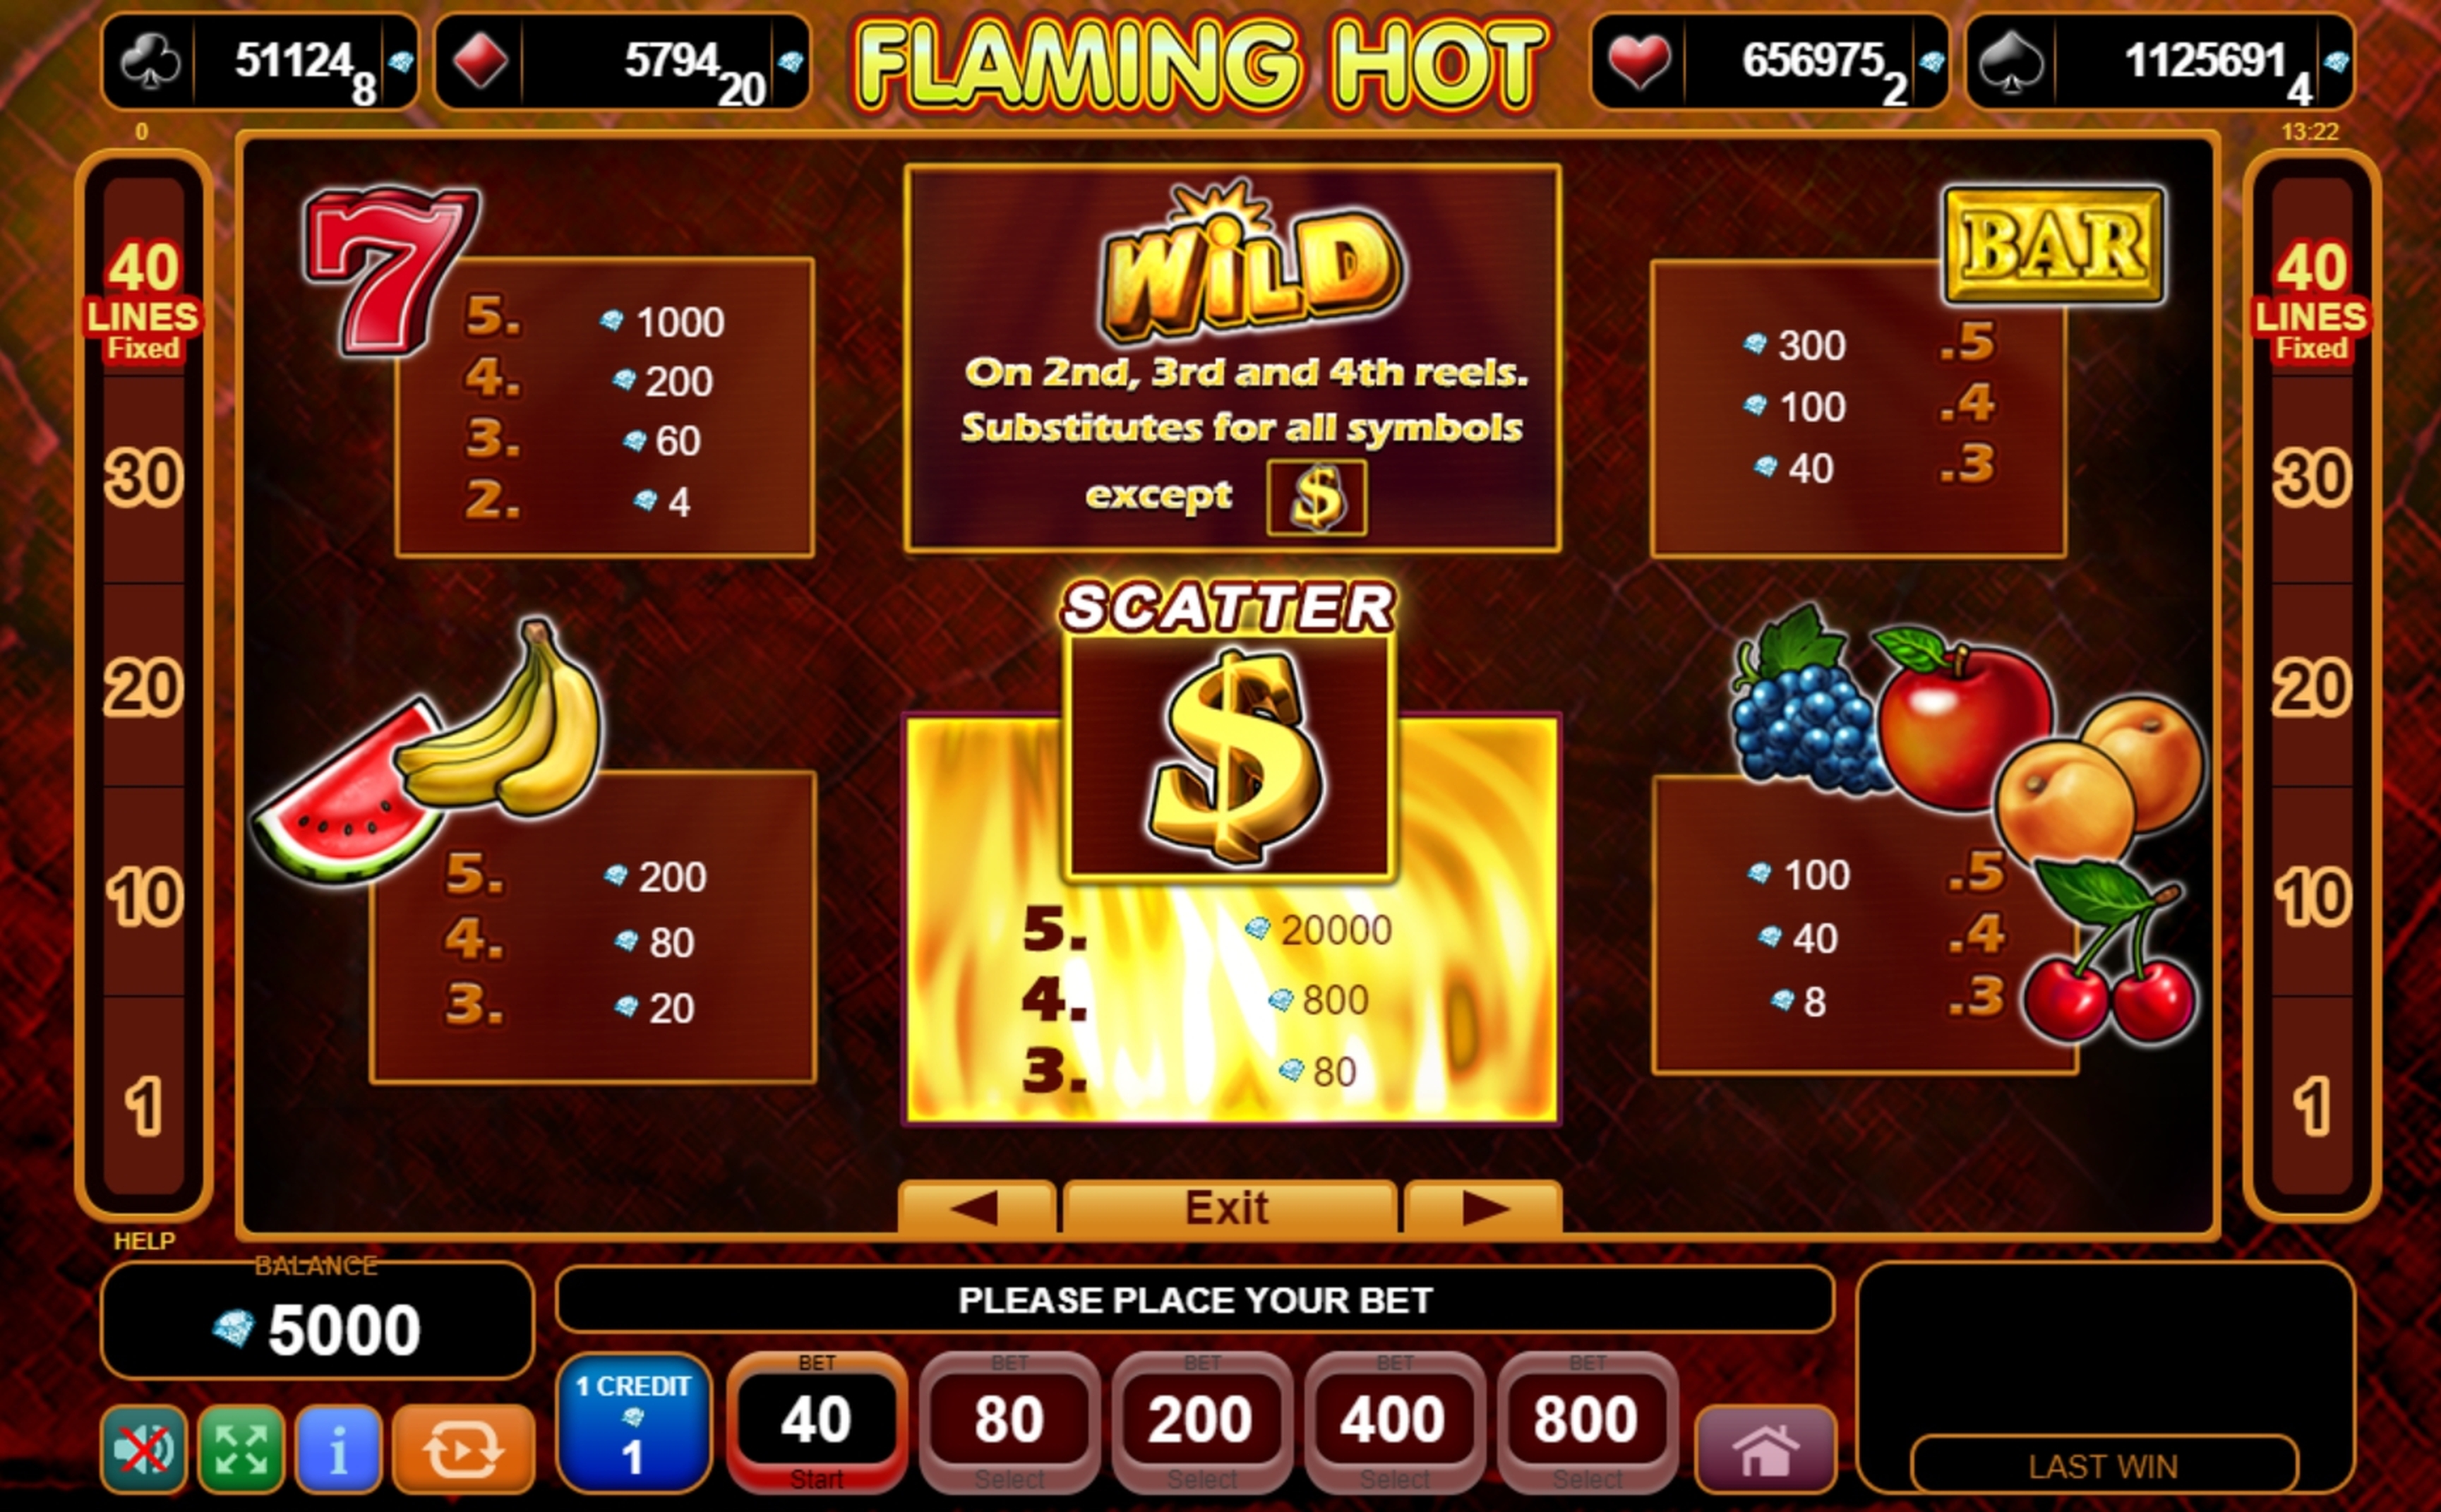 Flaming Hot Slot Machine